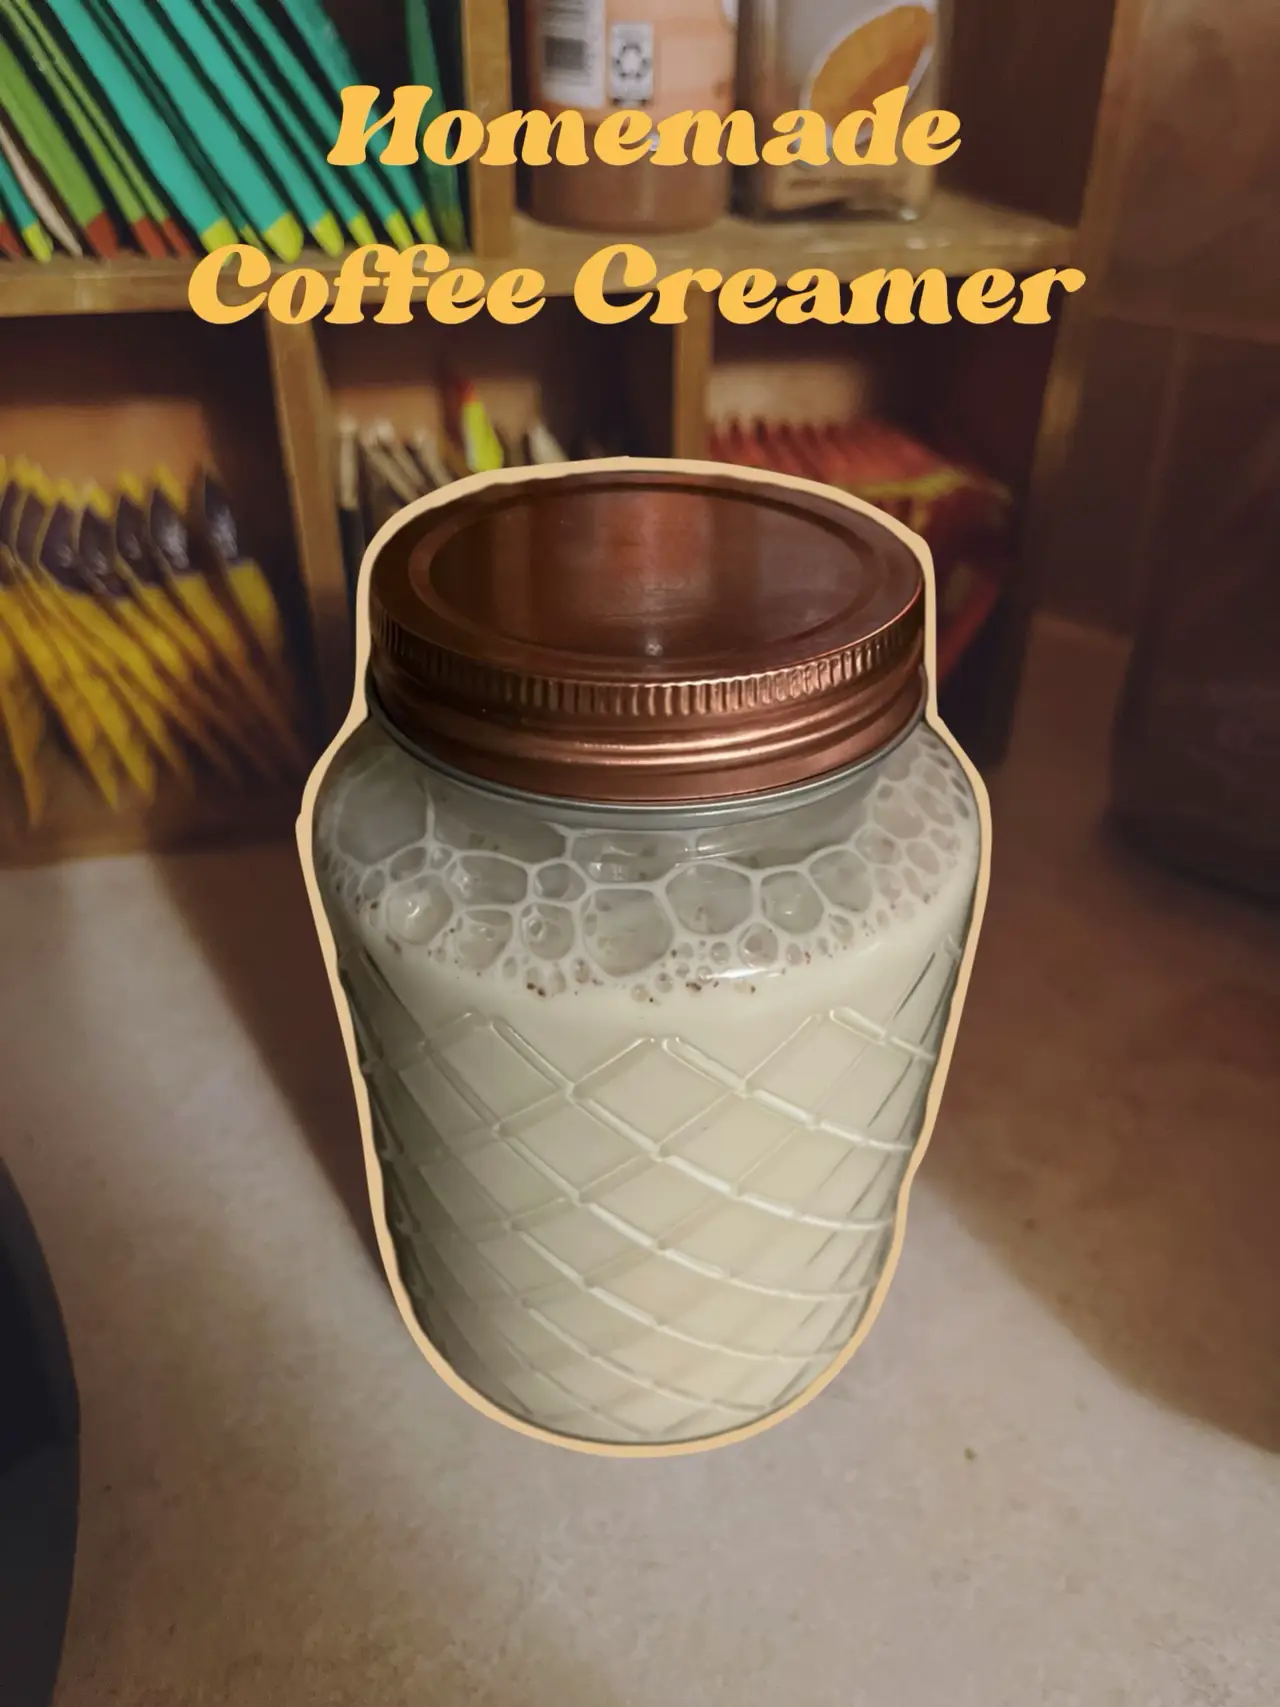 Homemade Coffee creamer recipe from @thecraftologist